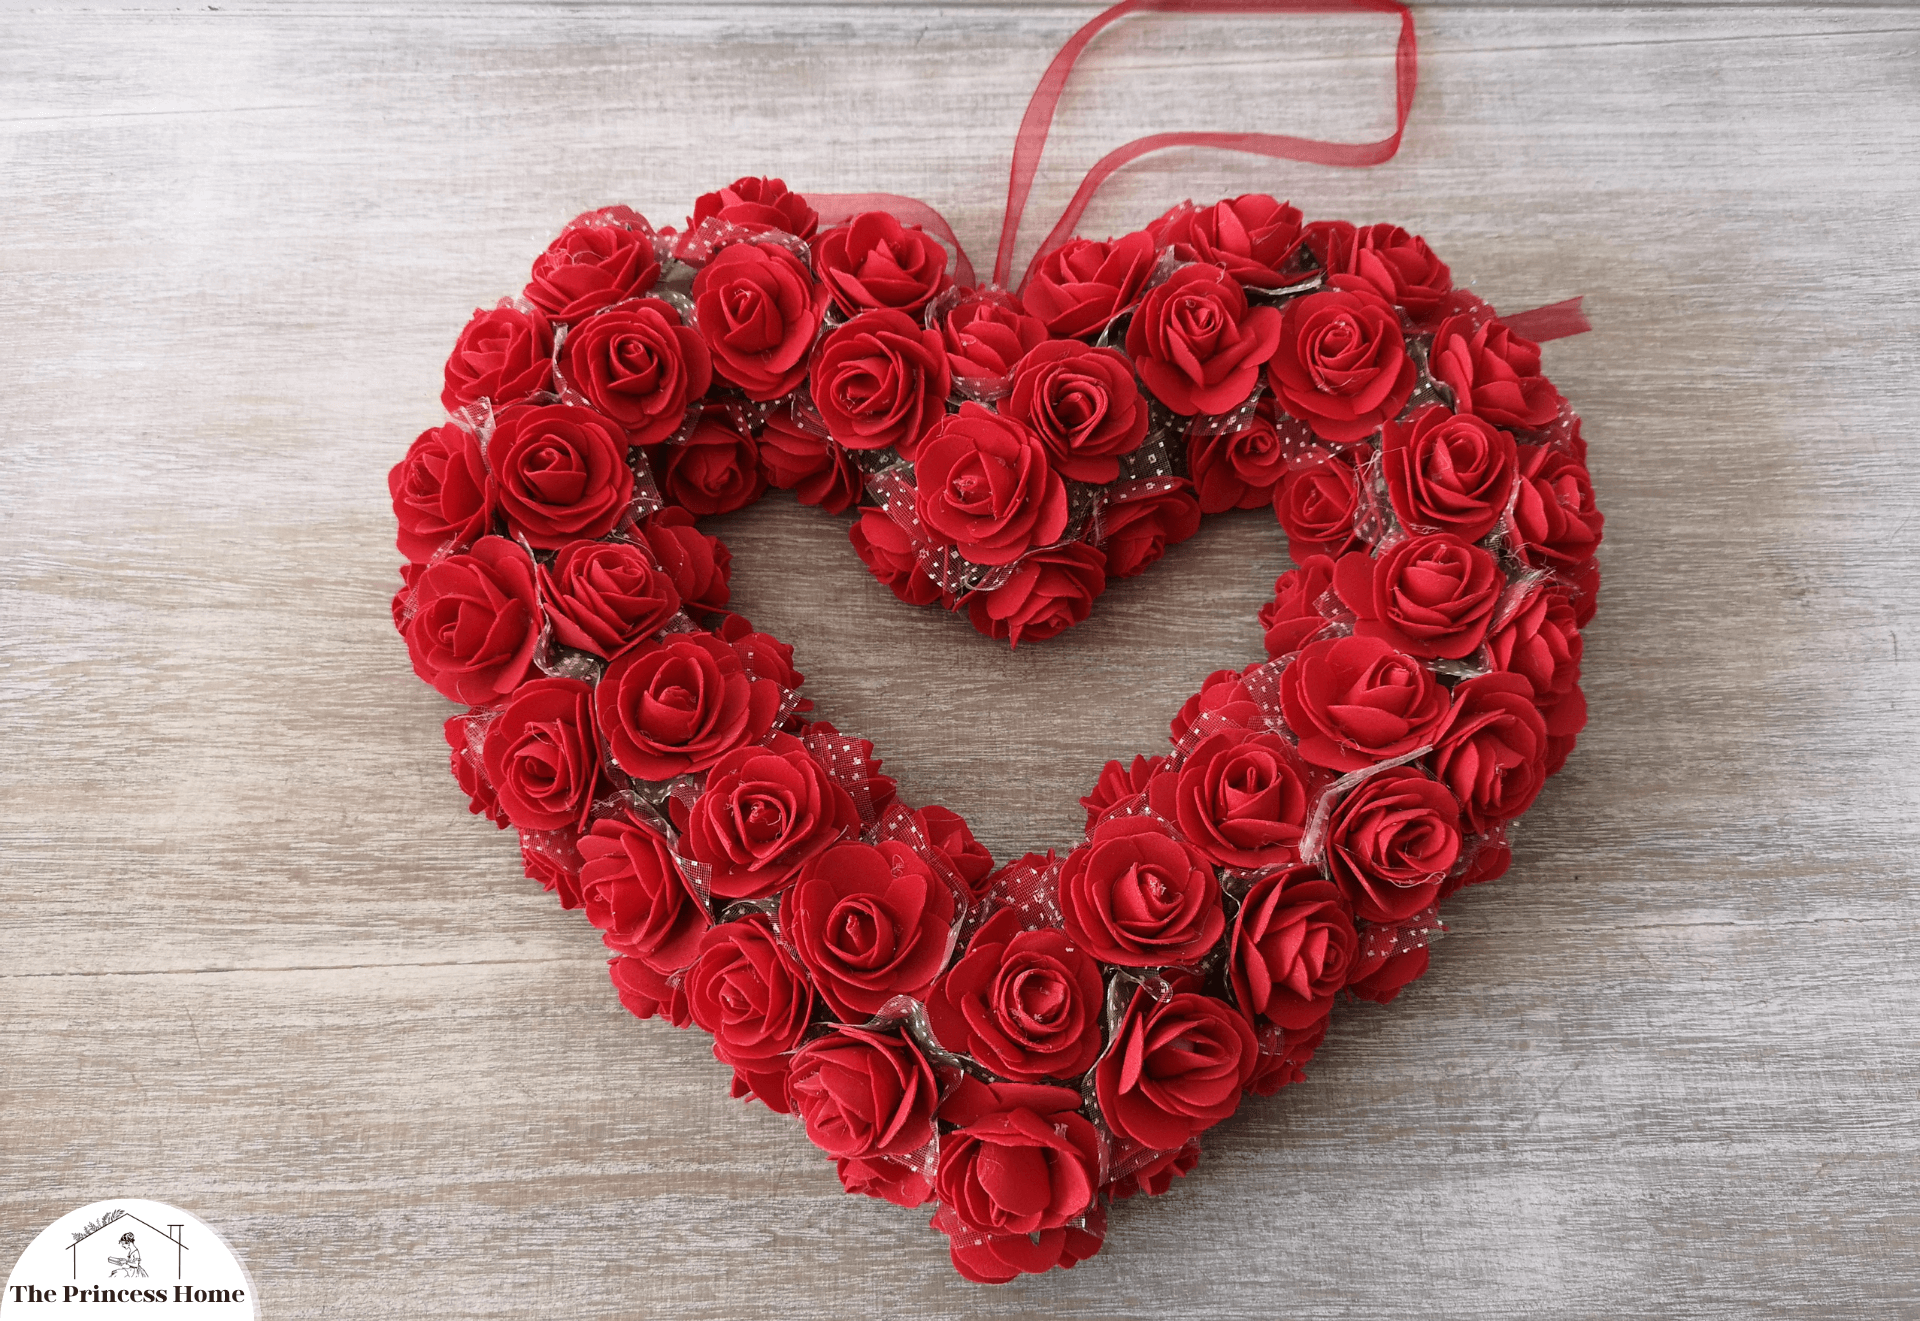 5.Love-Infused Wreaths